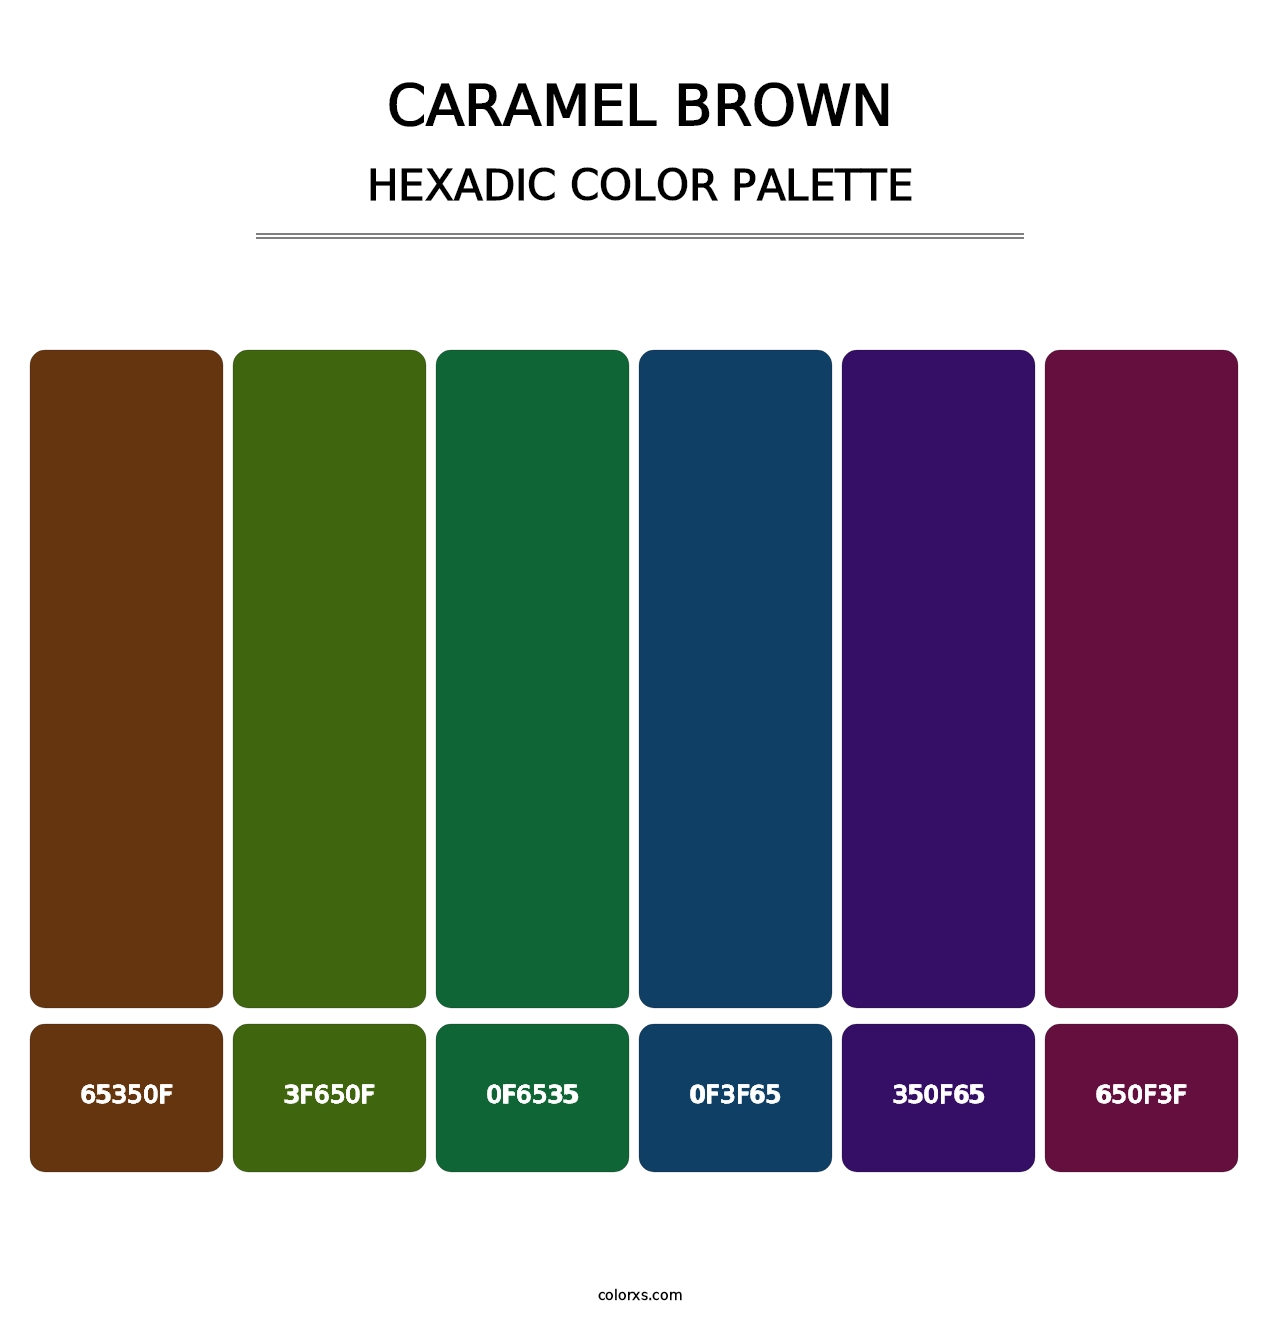 Caramel Brown - Hexadic Color Palette